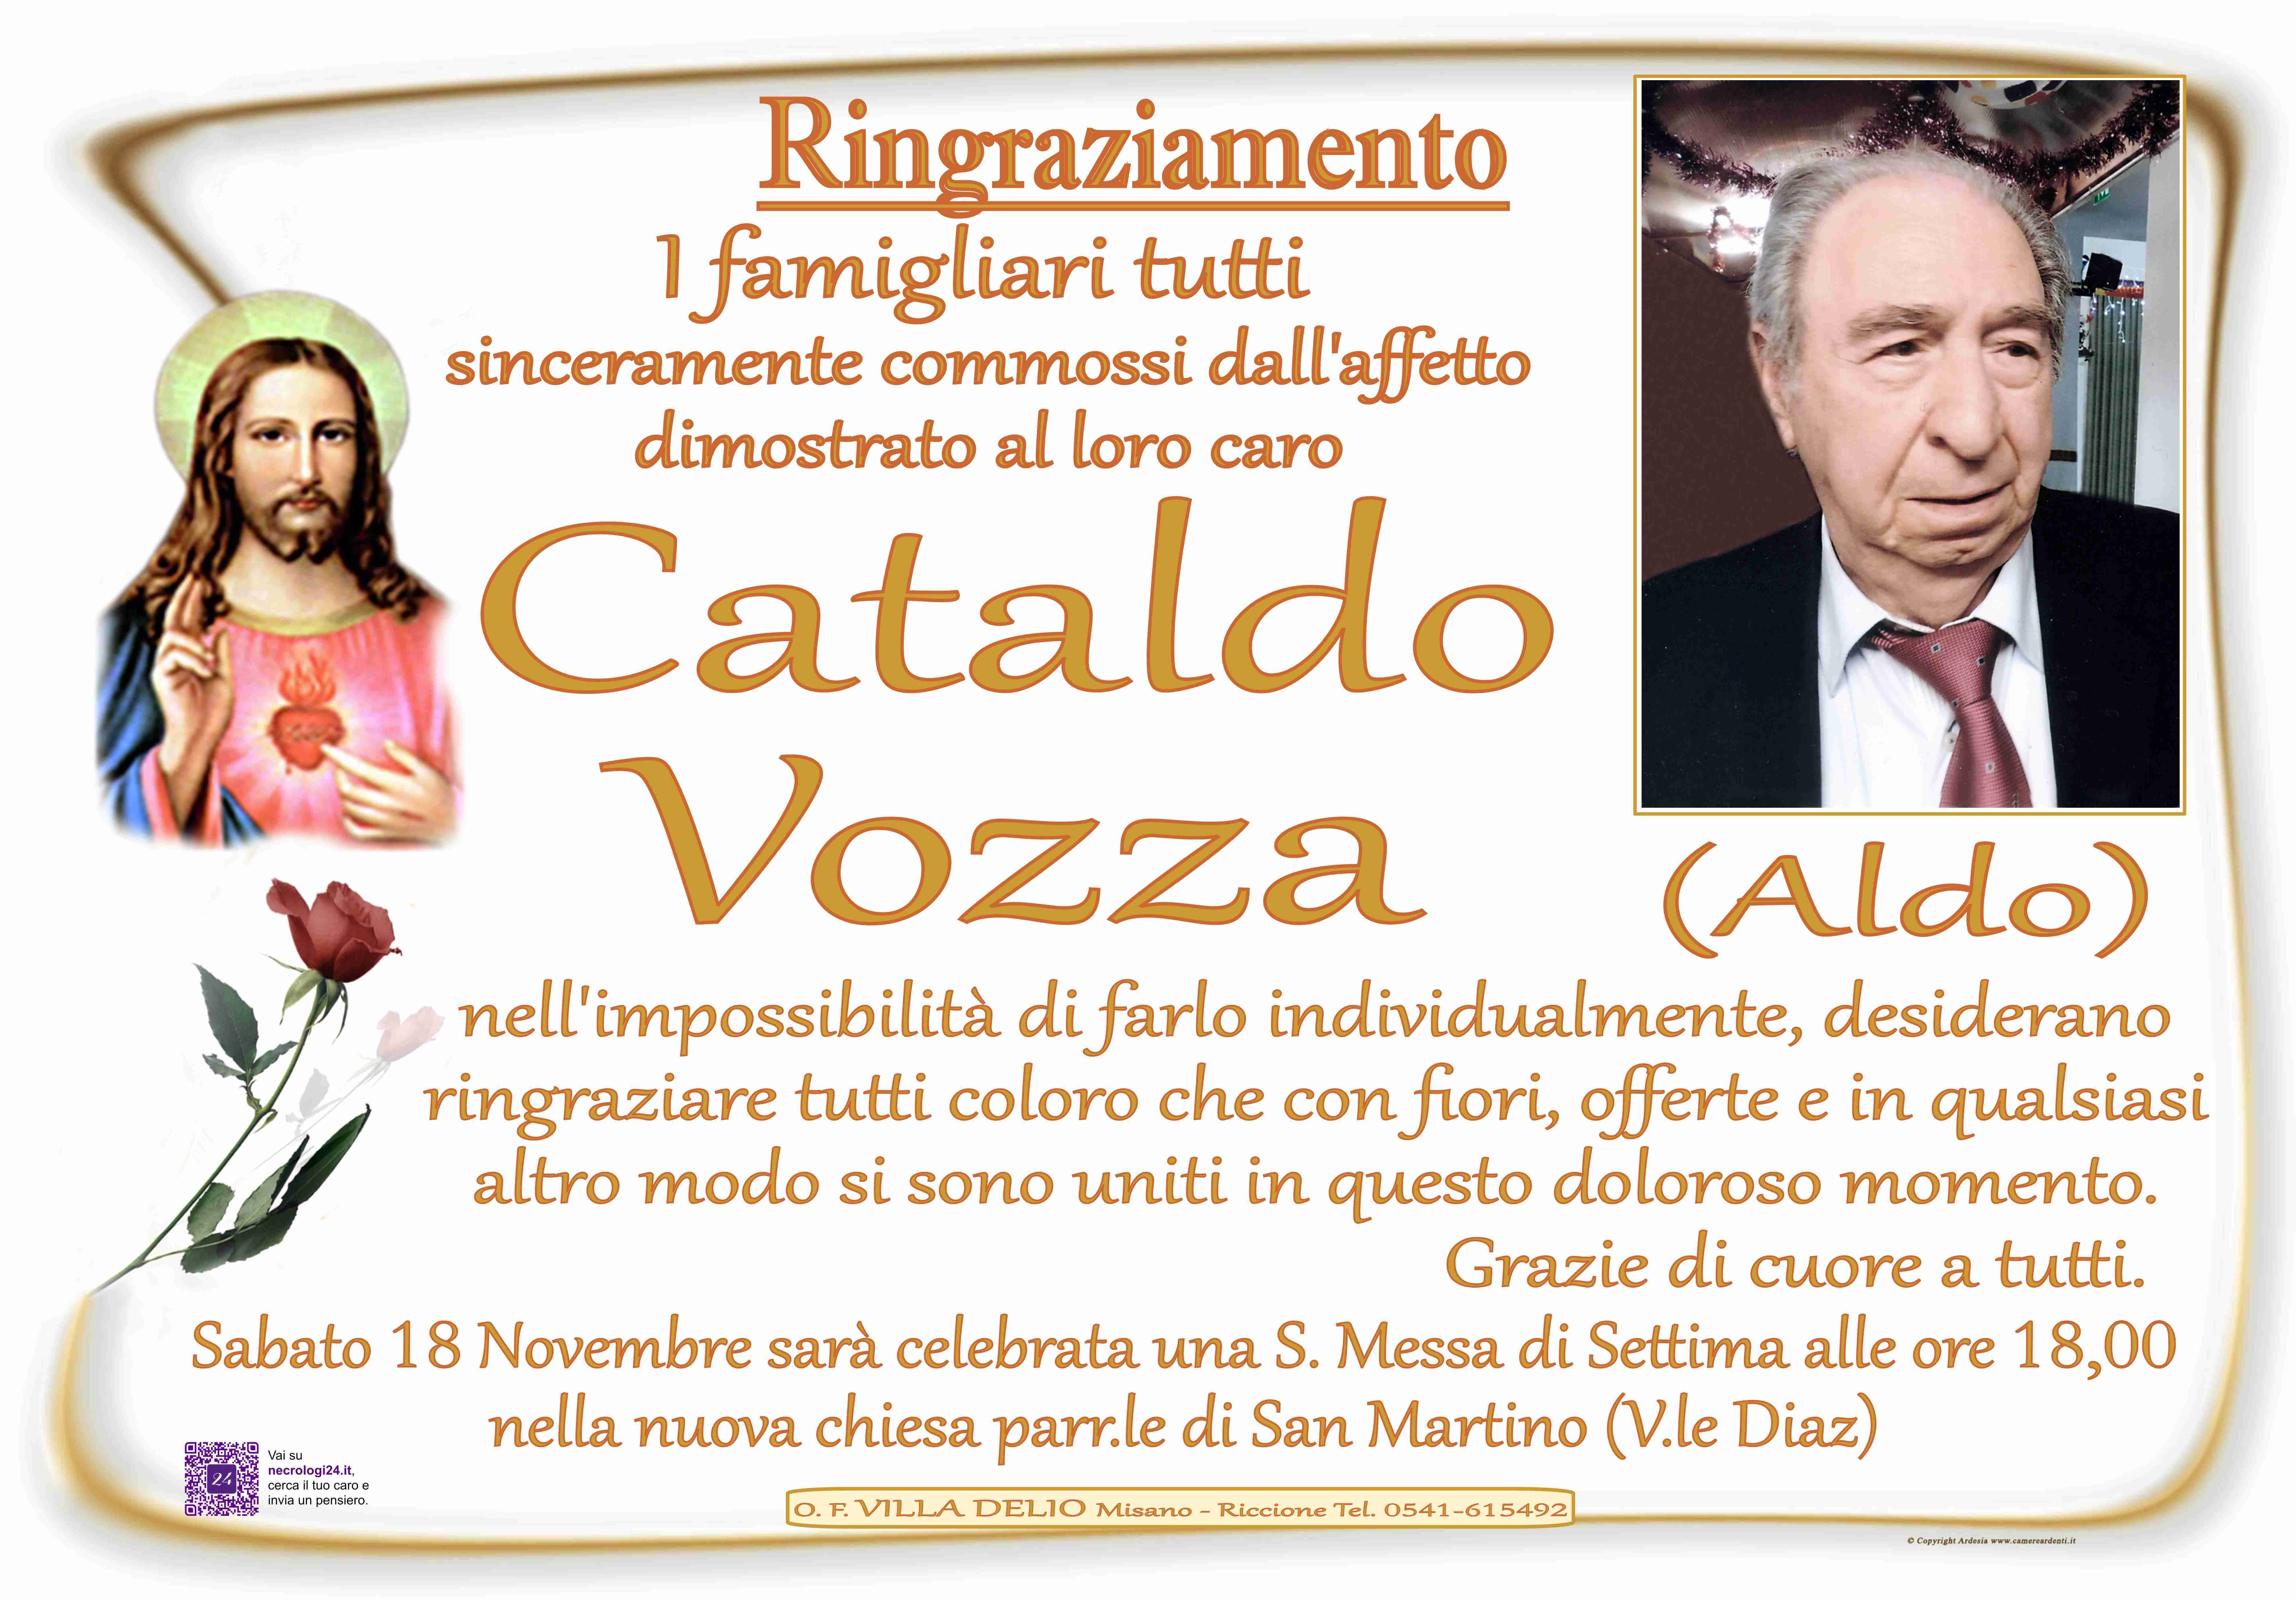 Cataldo Vozza